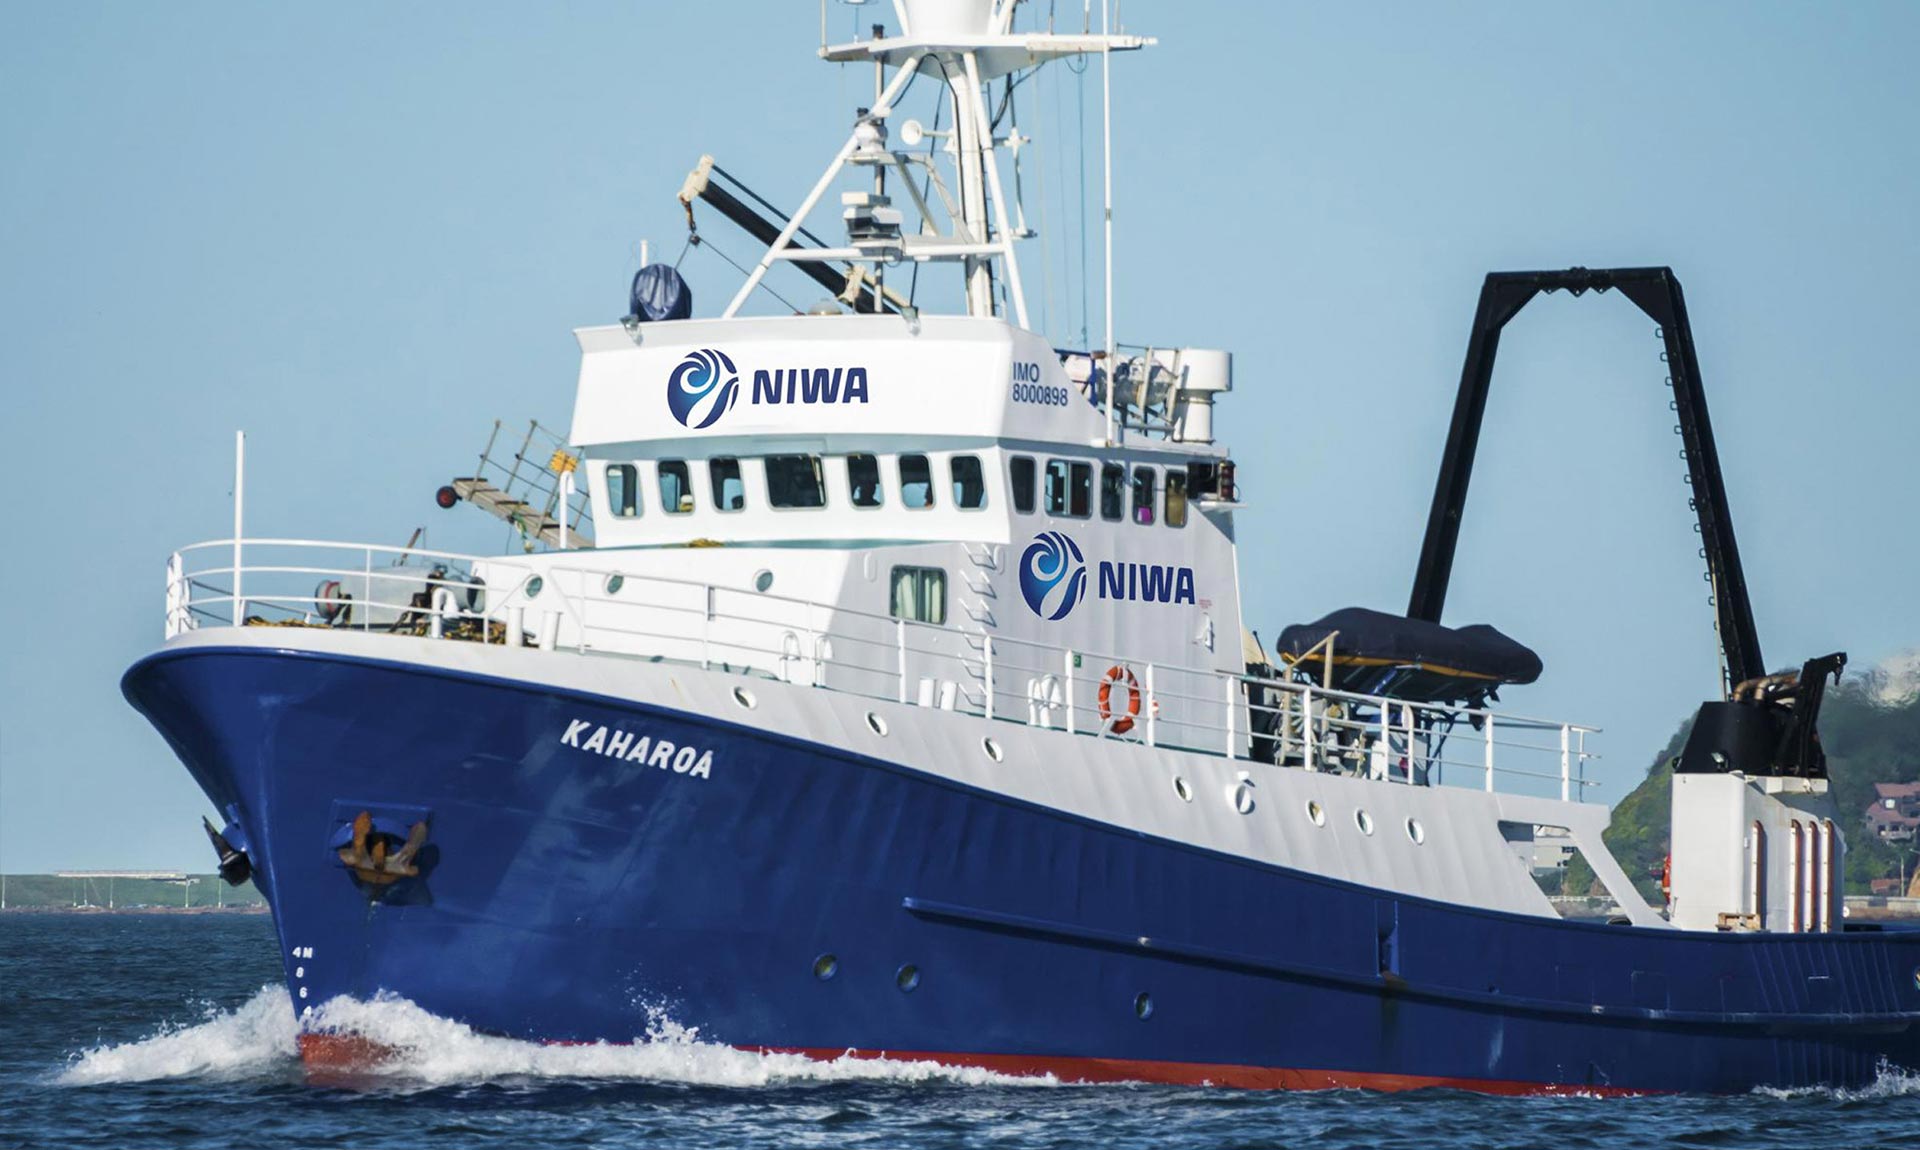 NIWA's Research vessel 'Kaharoa'